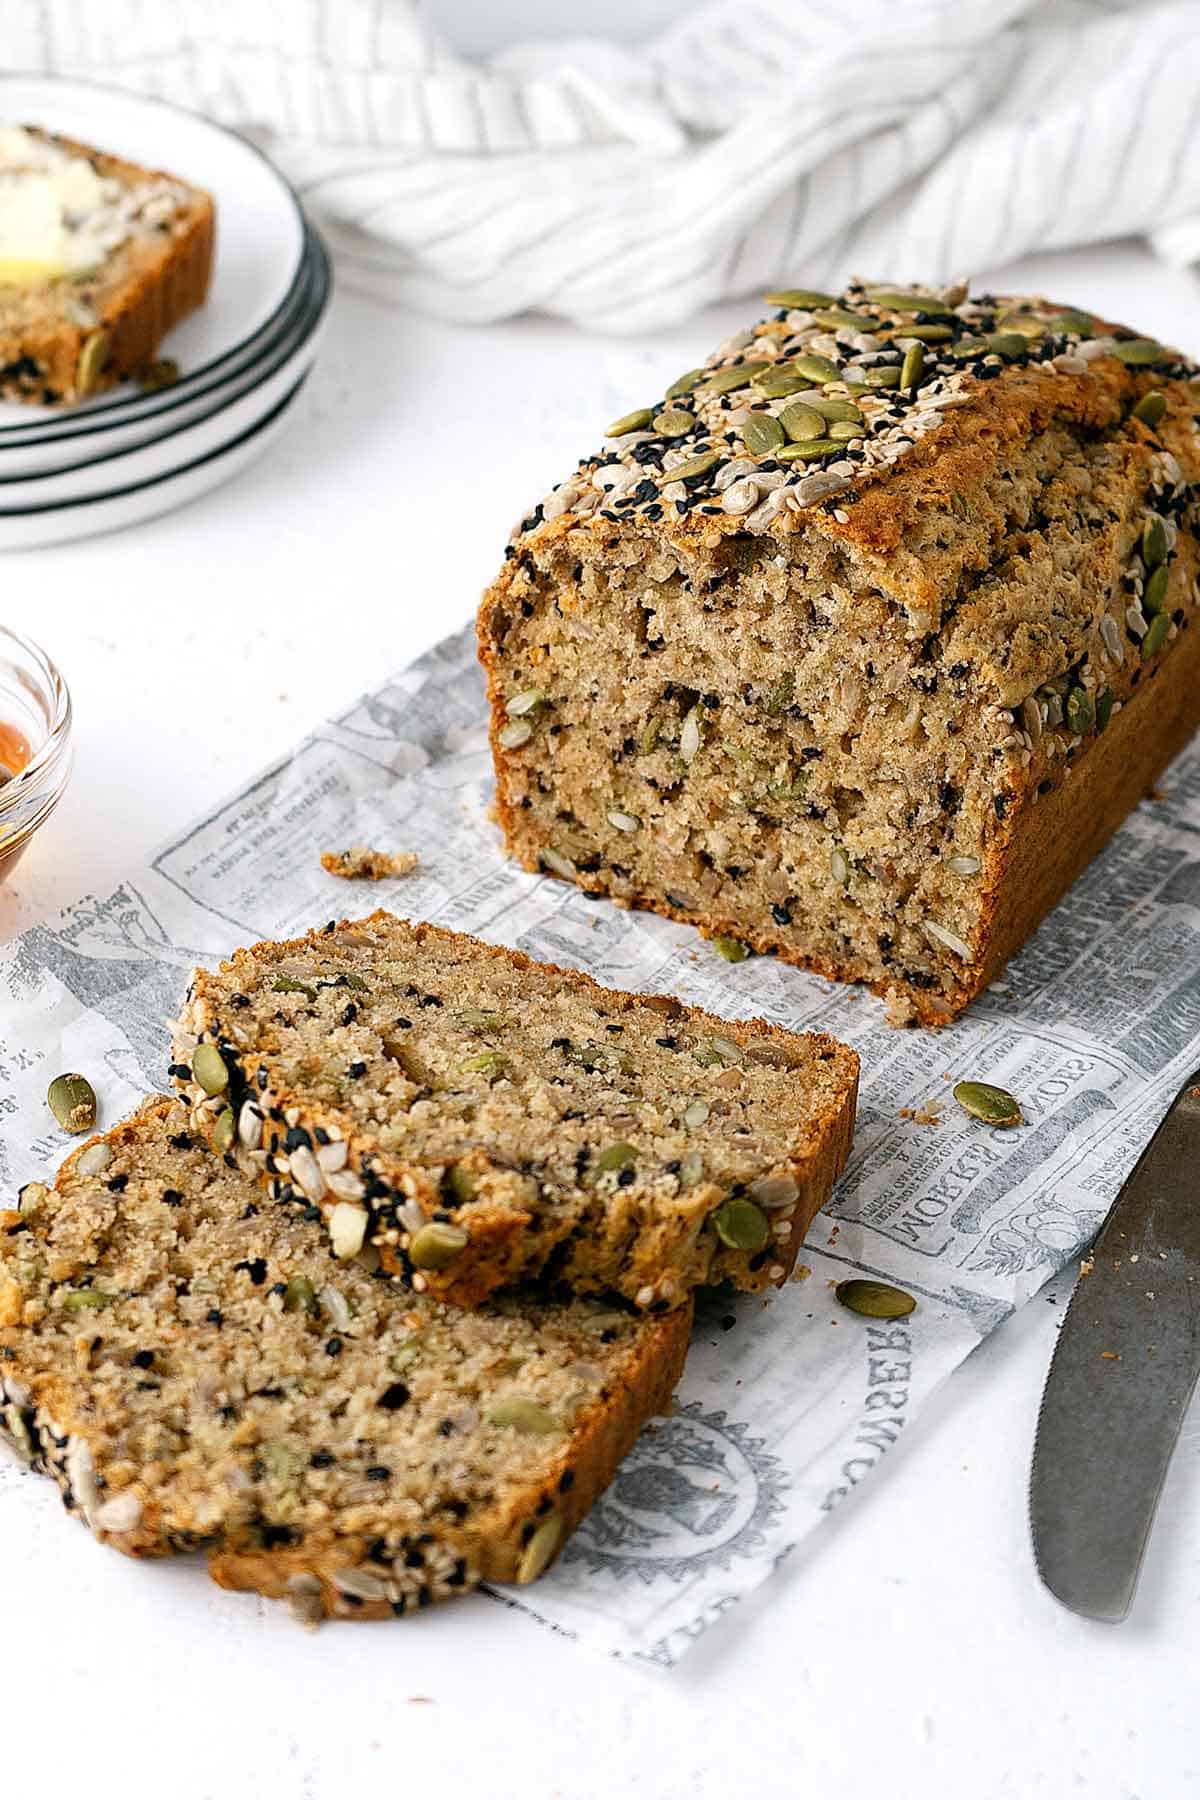 20 Sweet & Savory Quick Bread Recipes